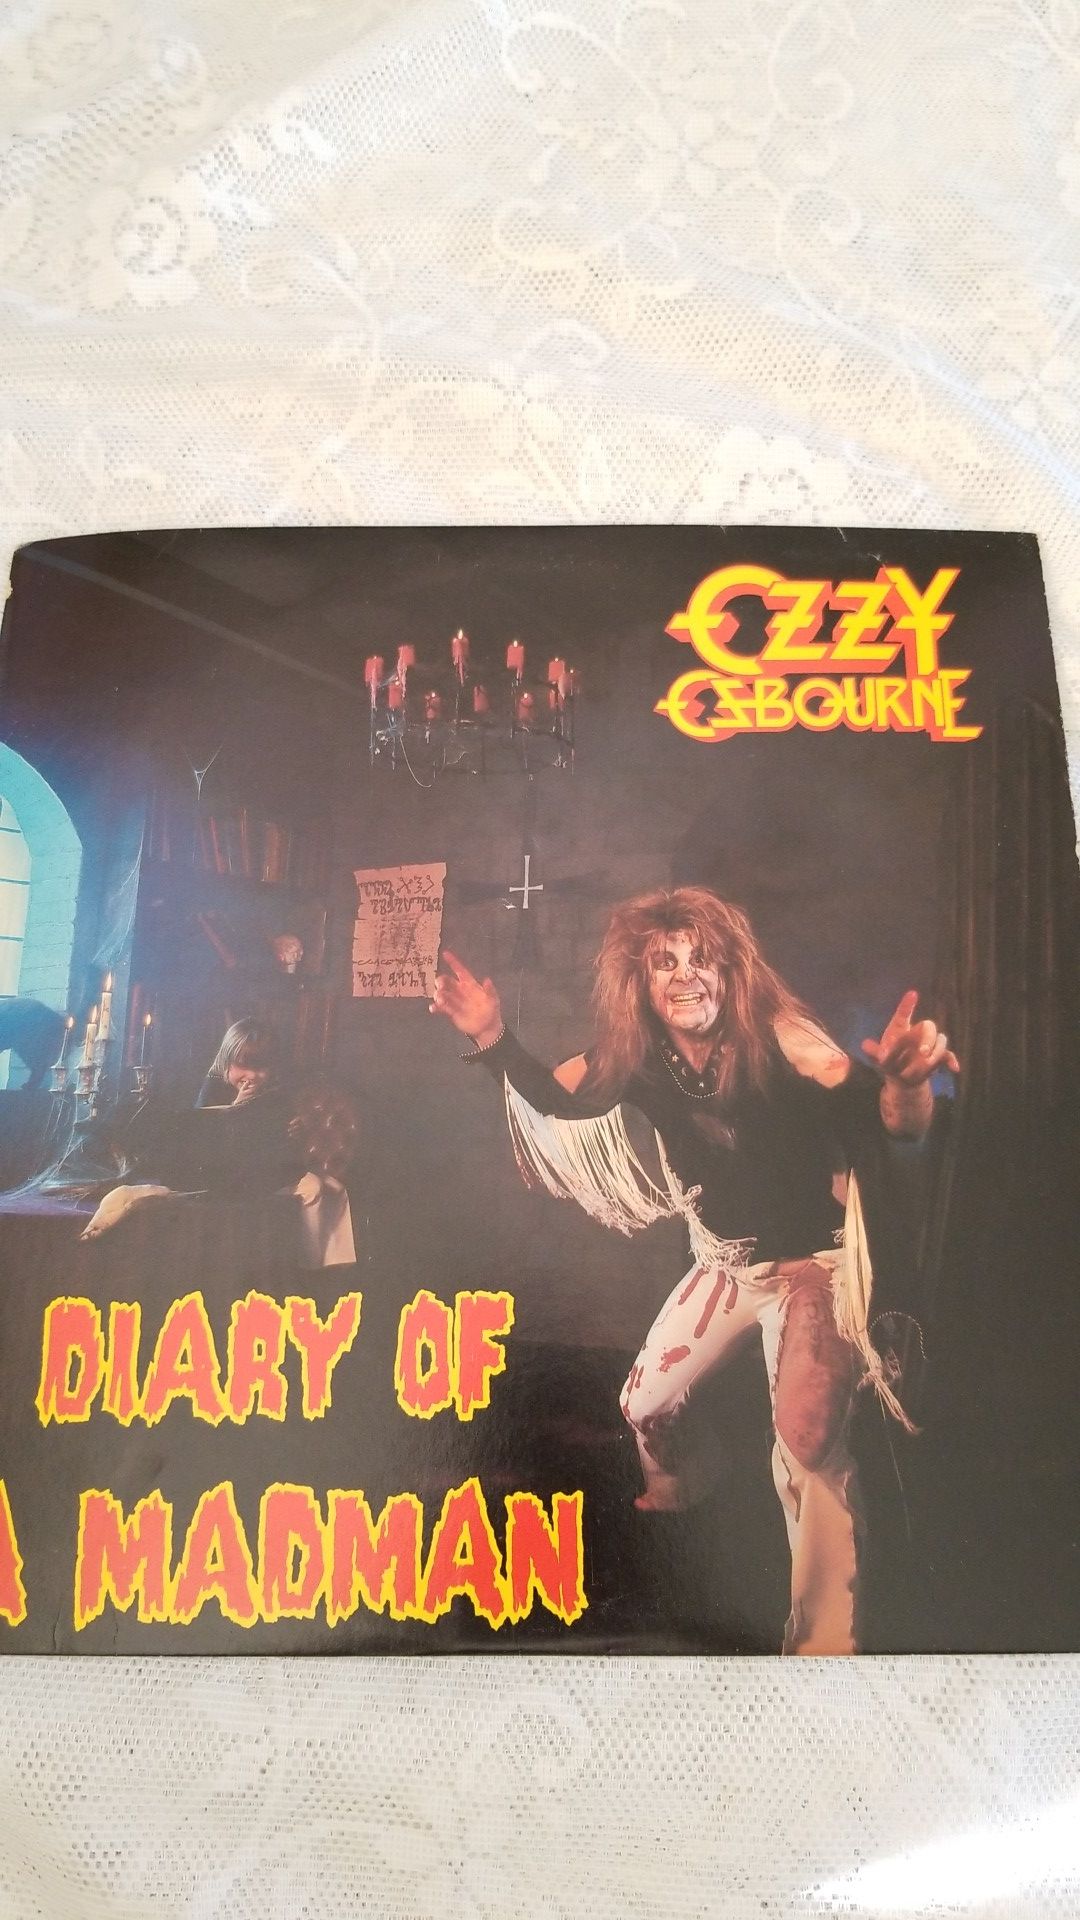 OZZY OSBOURNE DIARY OF A MADMAN VINYL LP RECORD ALBUM